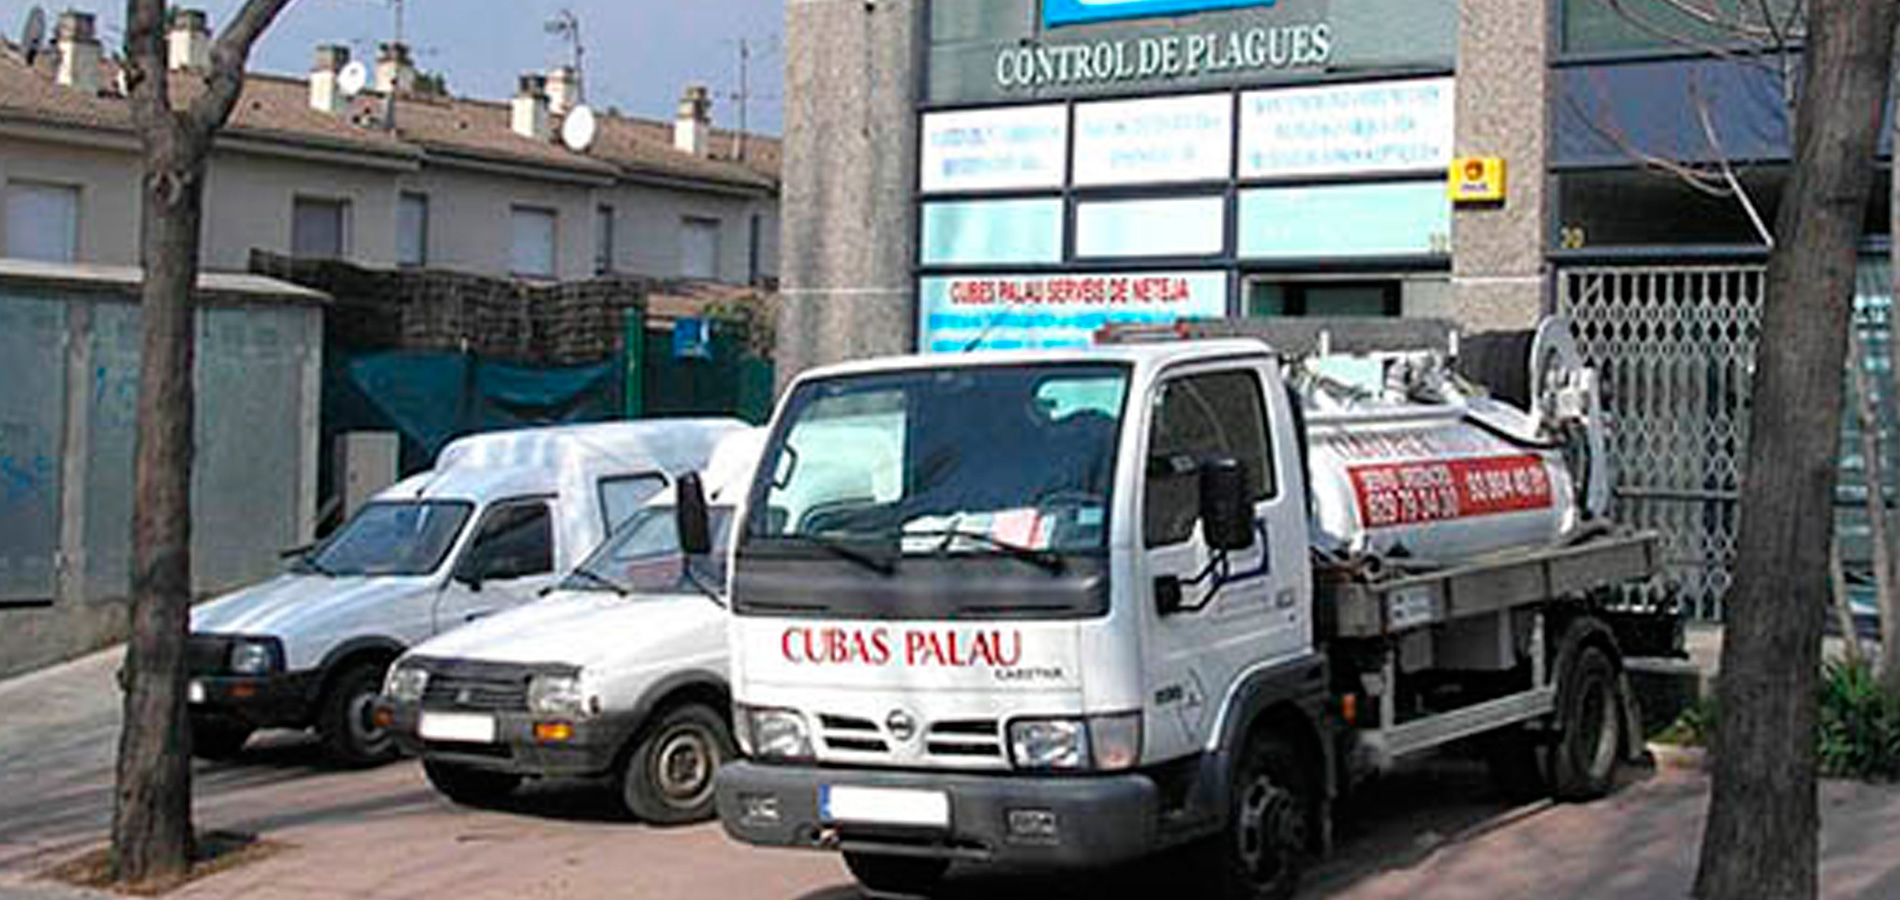 Cubas Palau furgoneta